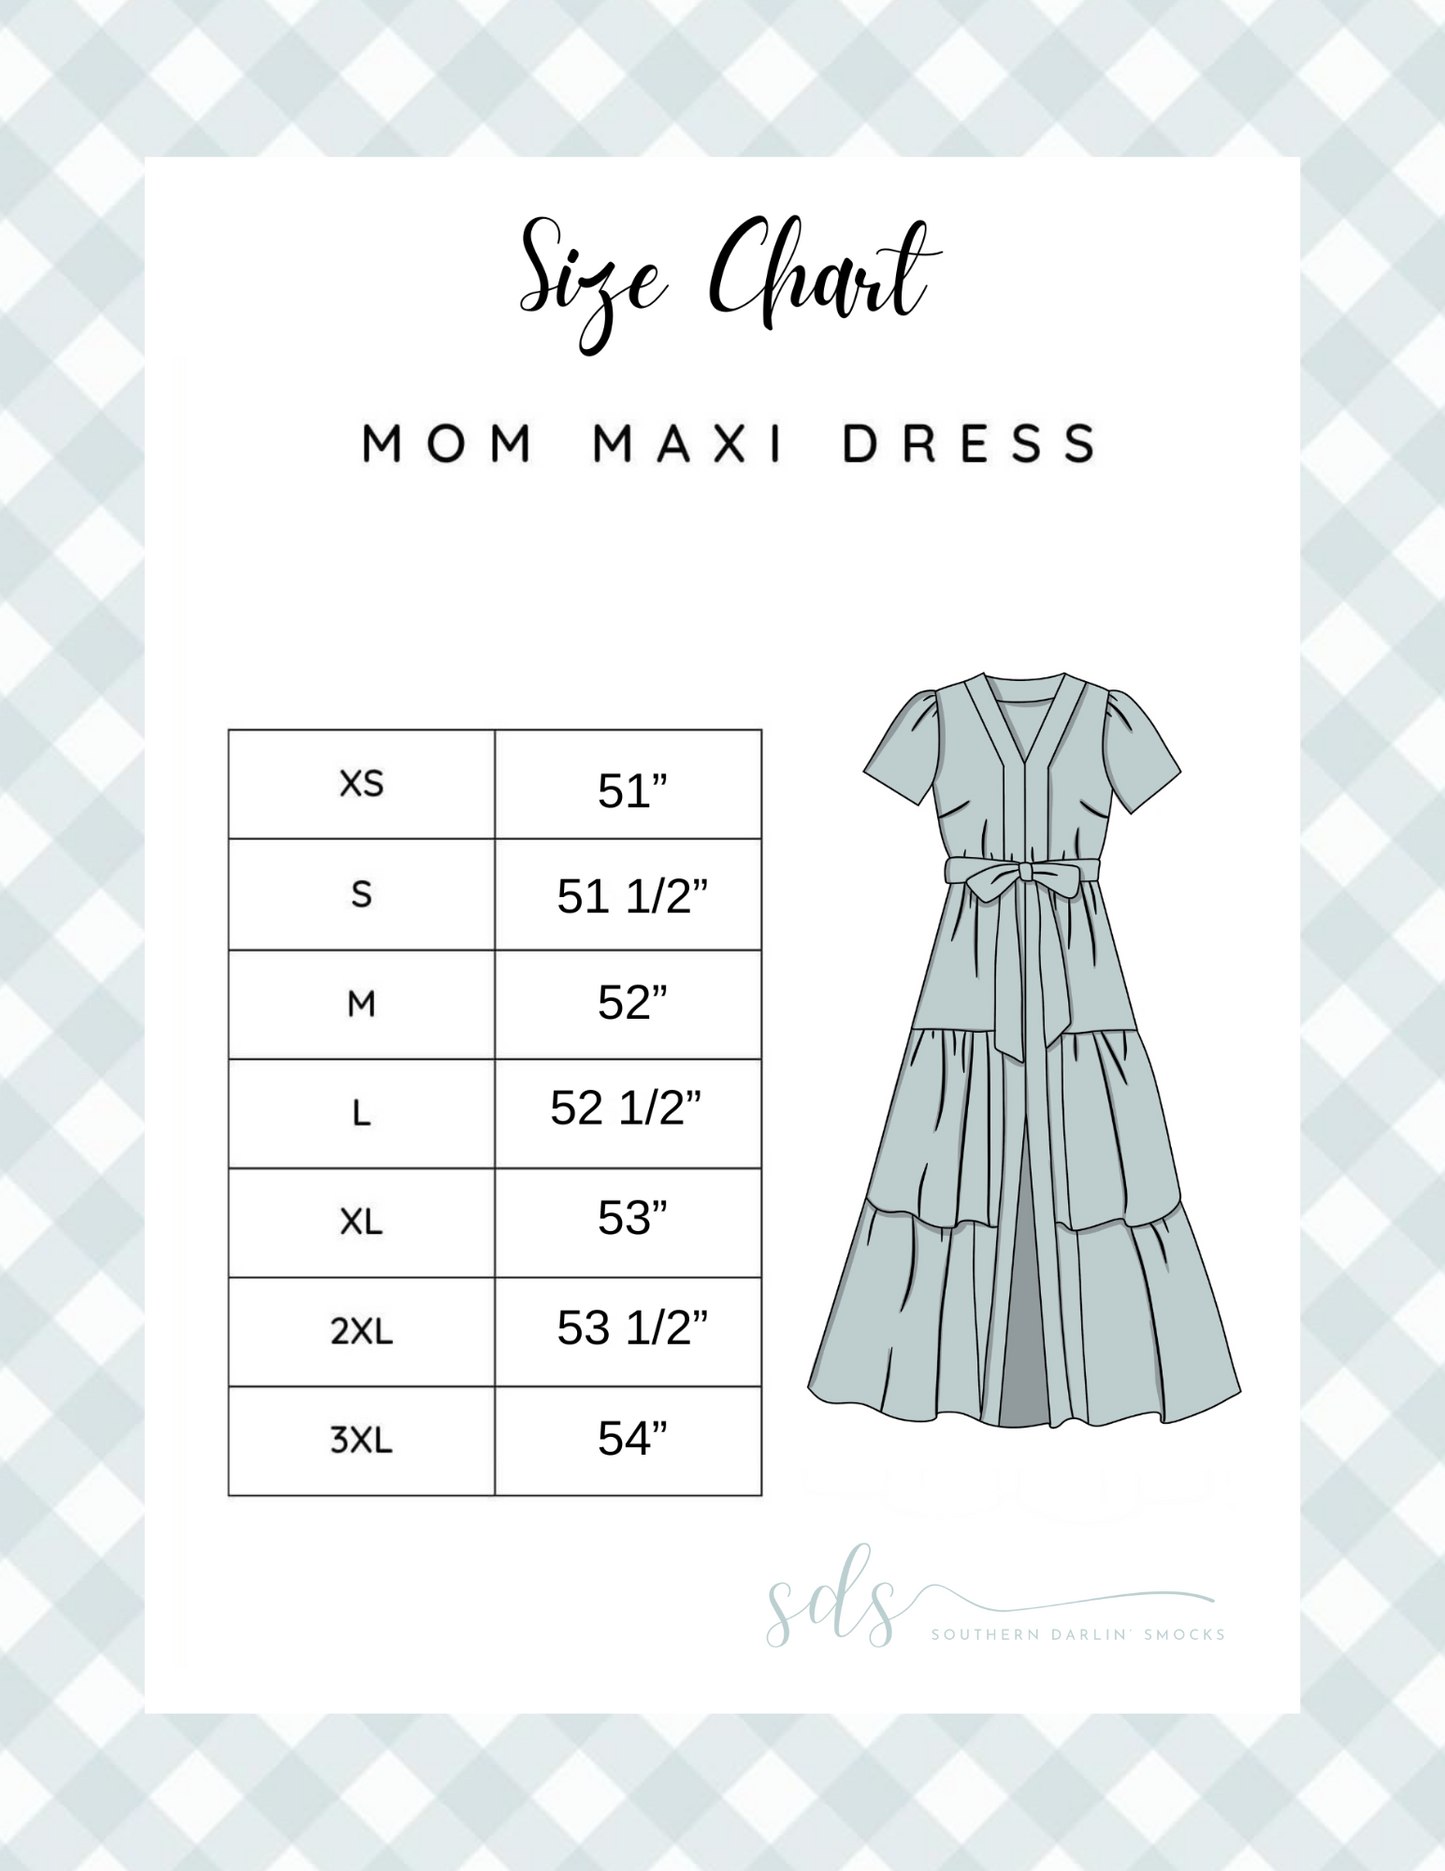 MOM MAXI DRESS SIZE CHART